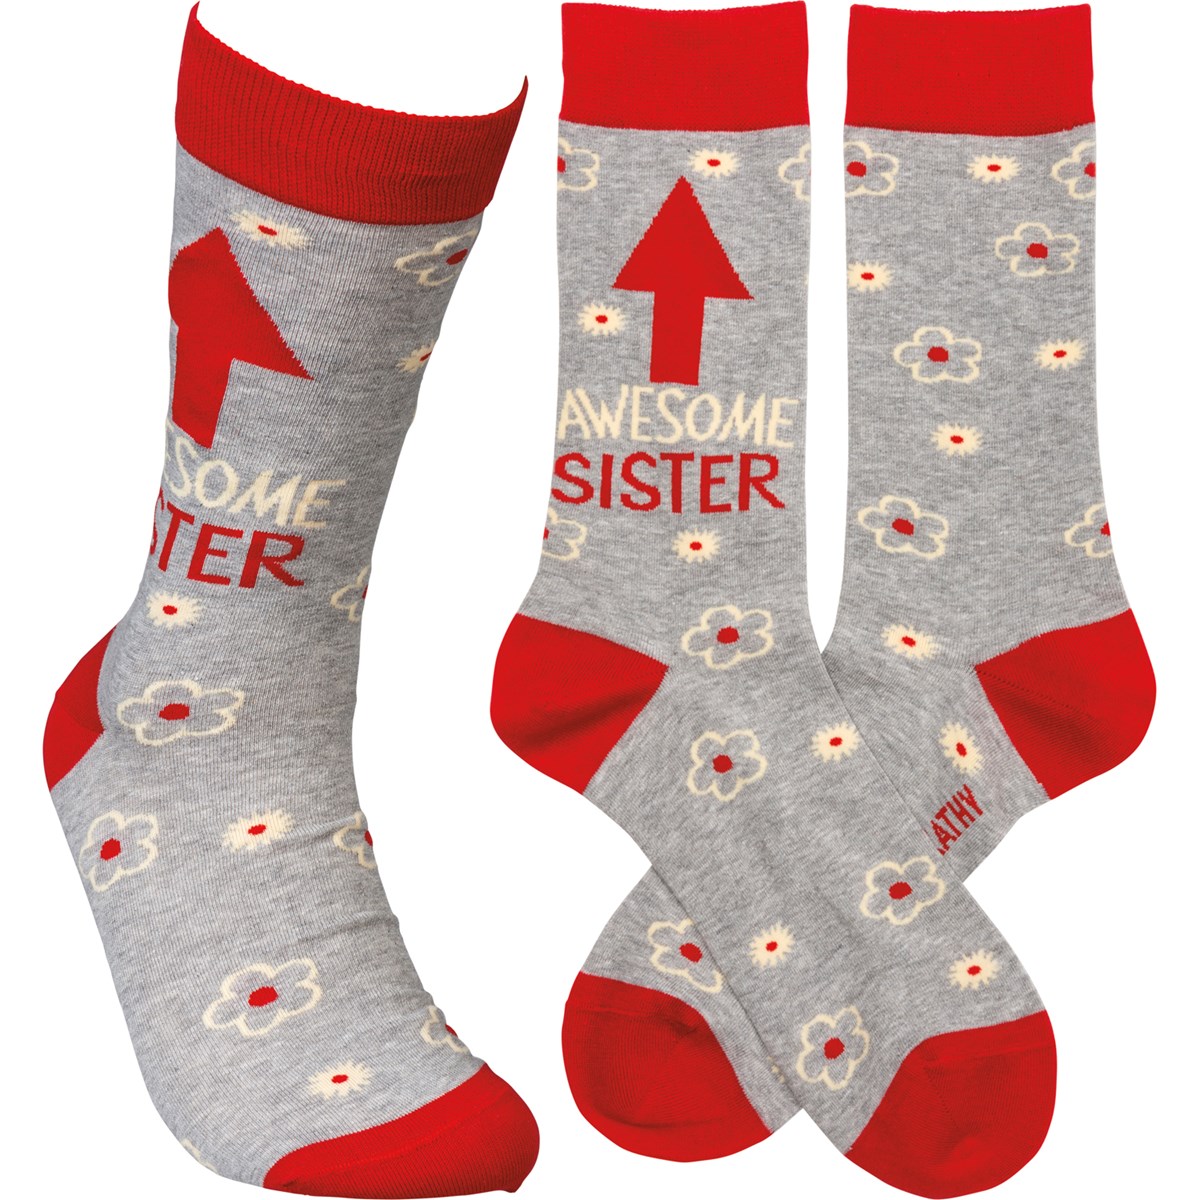 Awesome Sister Socks - Cotton, Nylon, Spandex